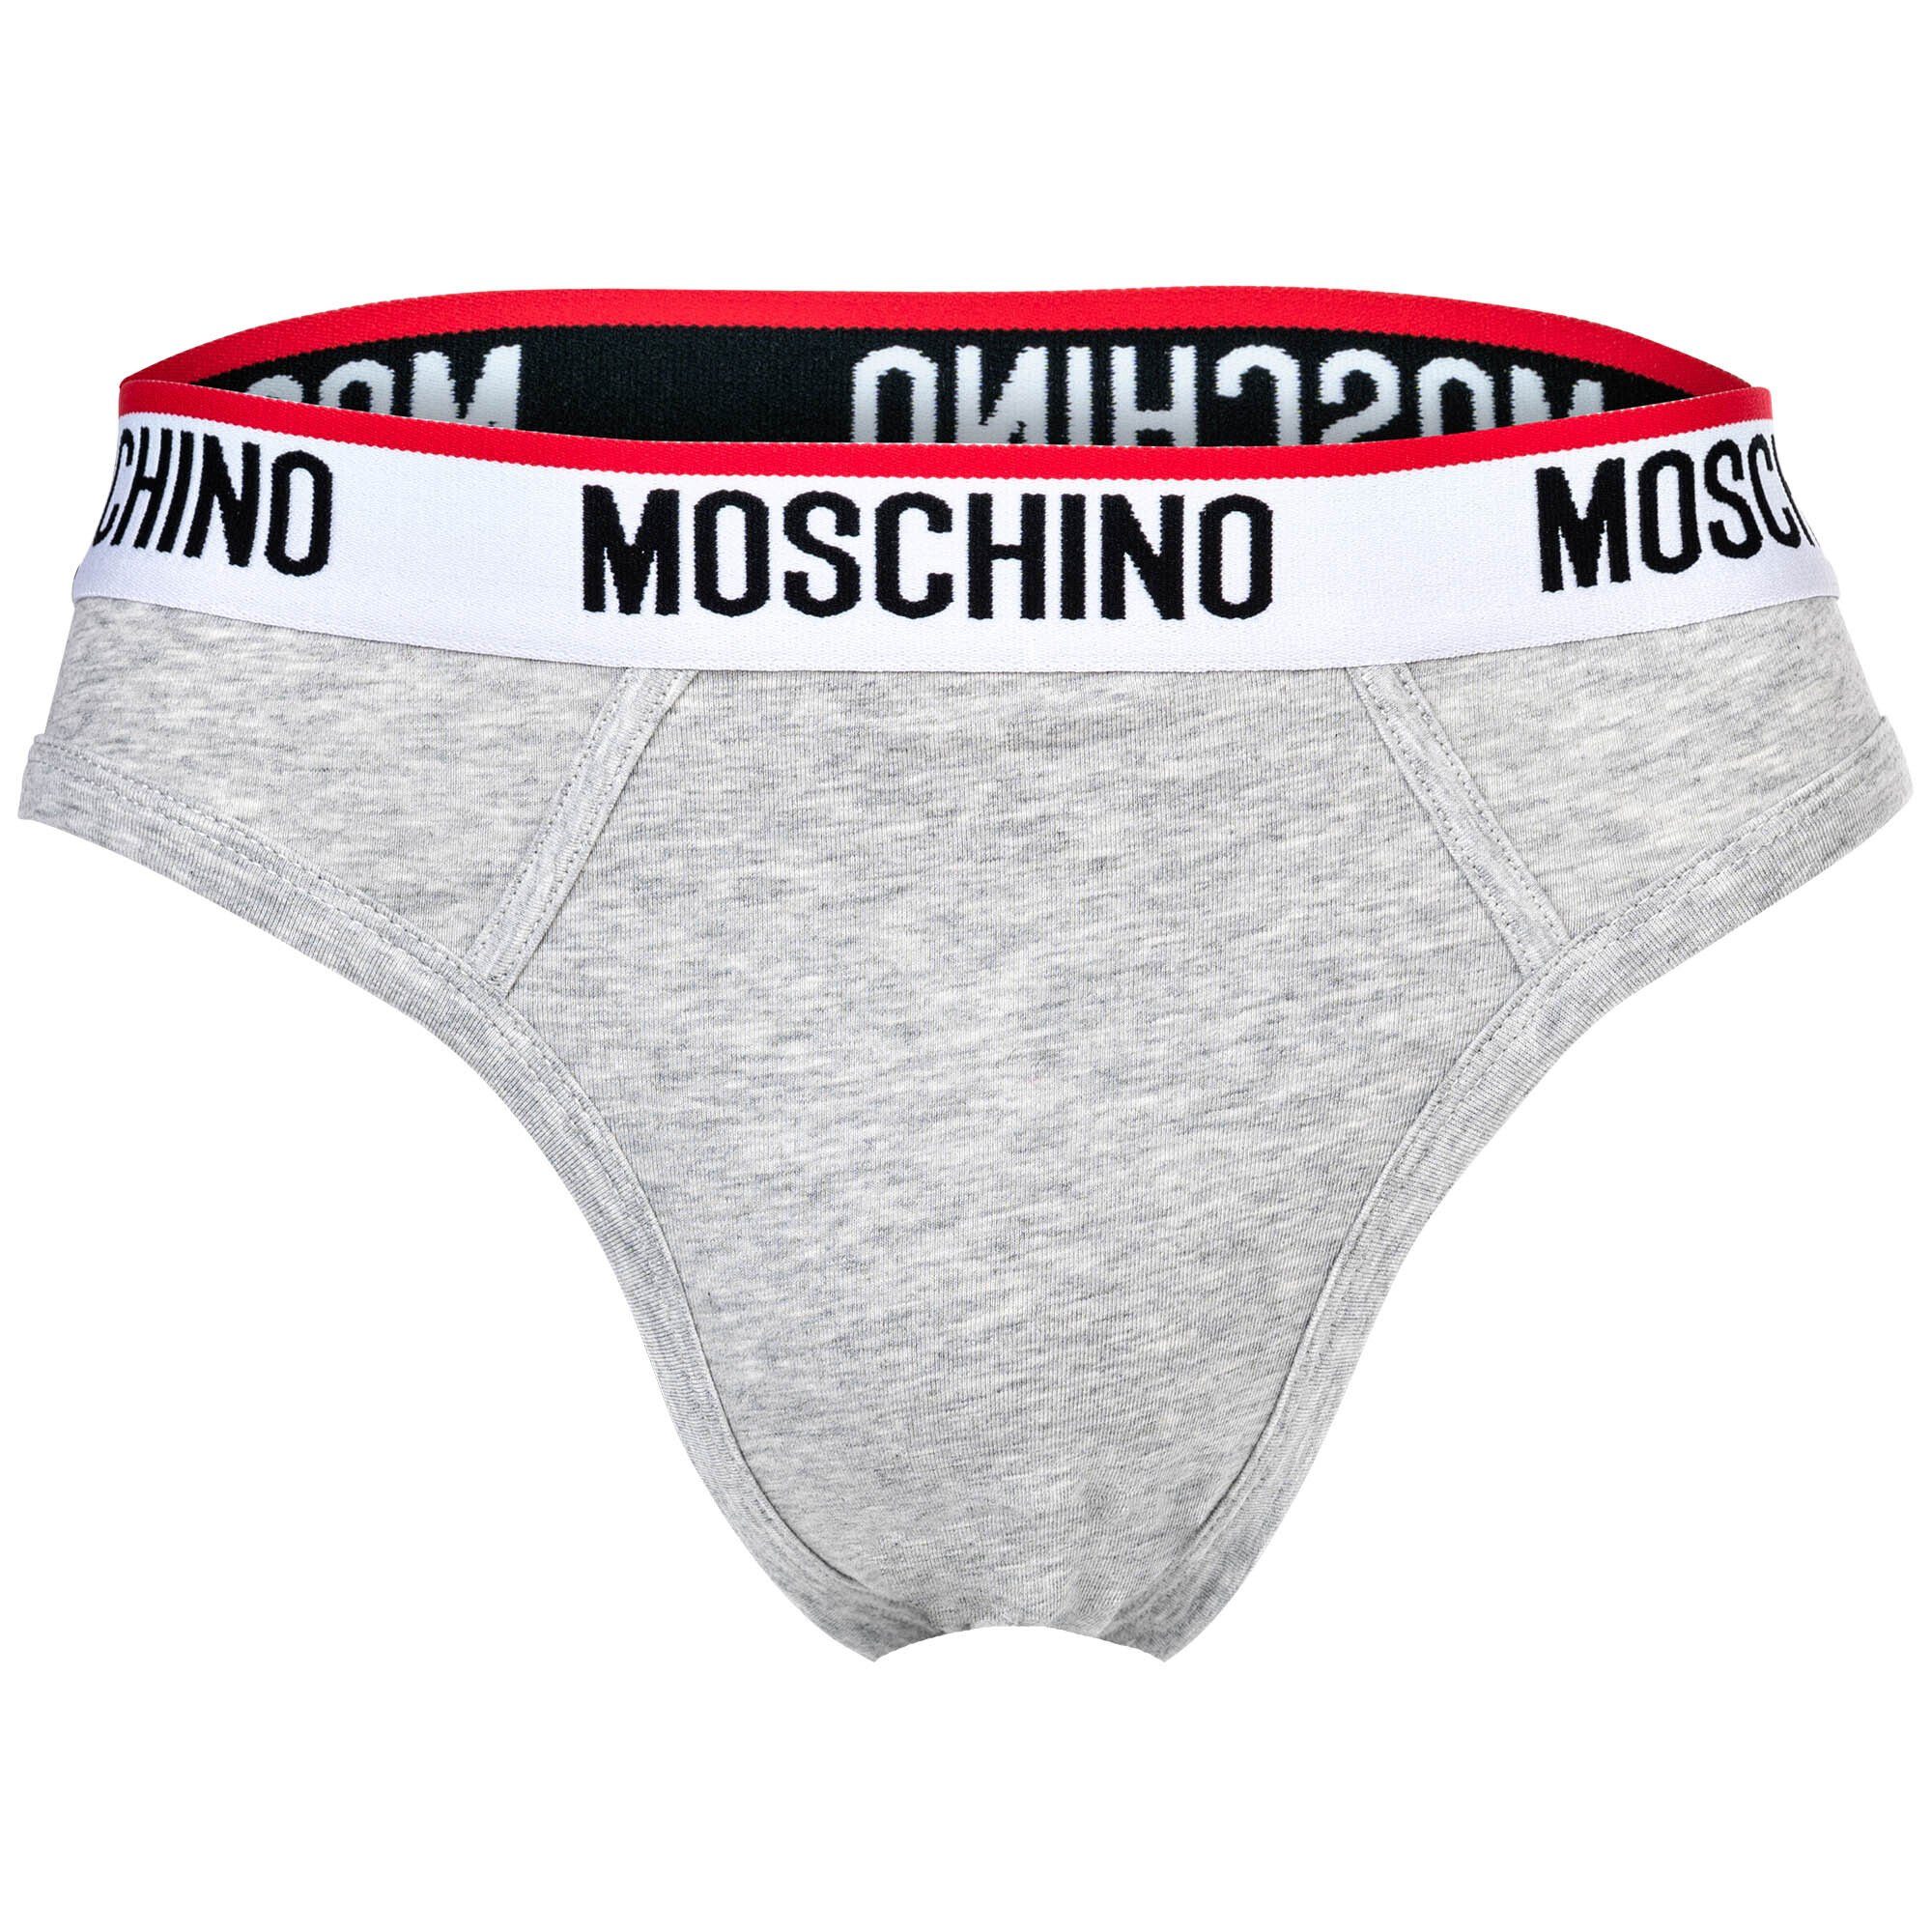 2er Moschino Herren Unterhose Slip Slips Pack Grau/Weiß Micro -